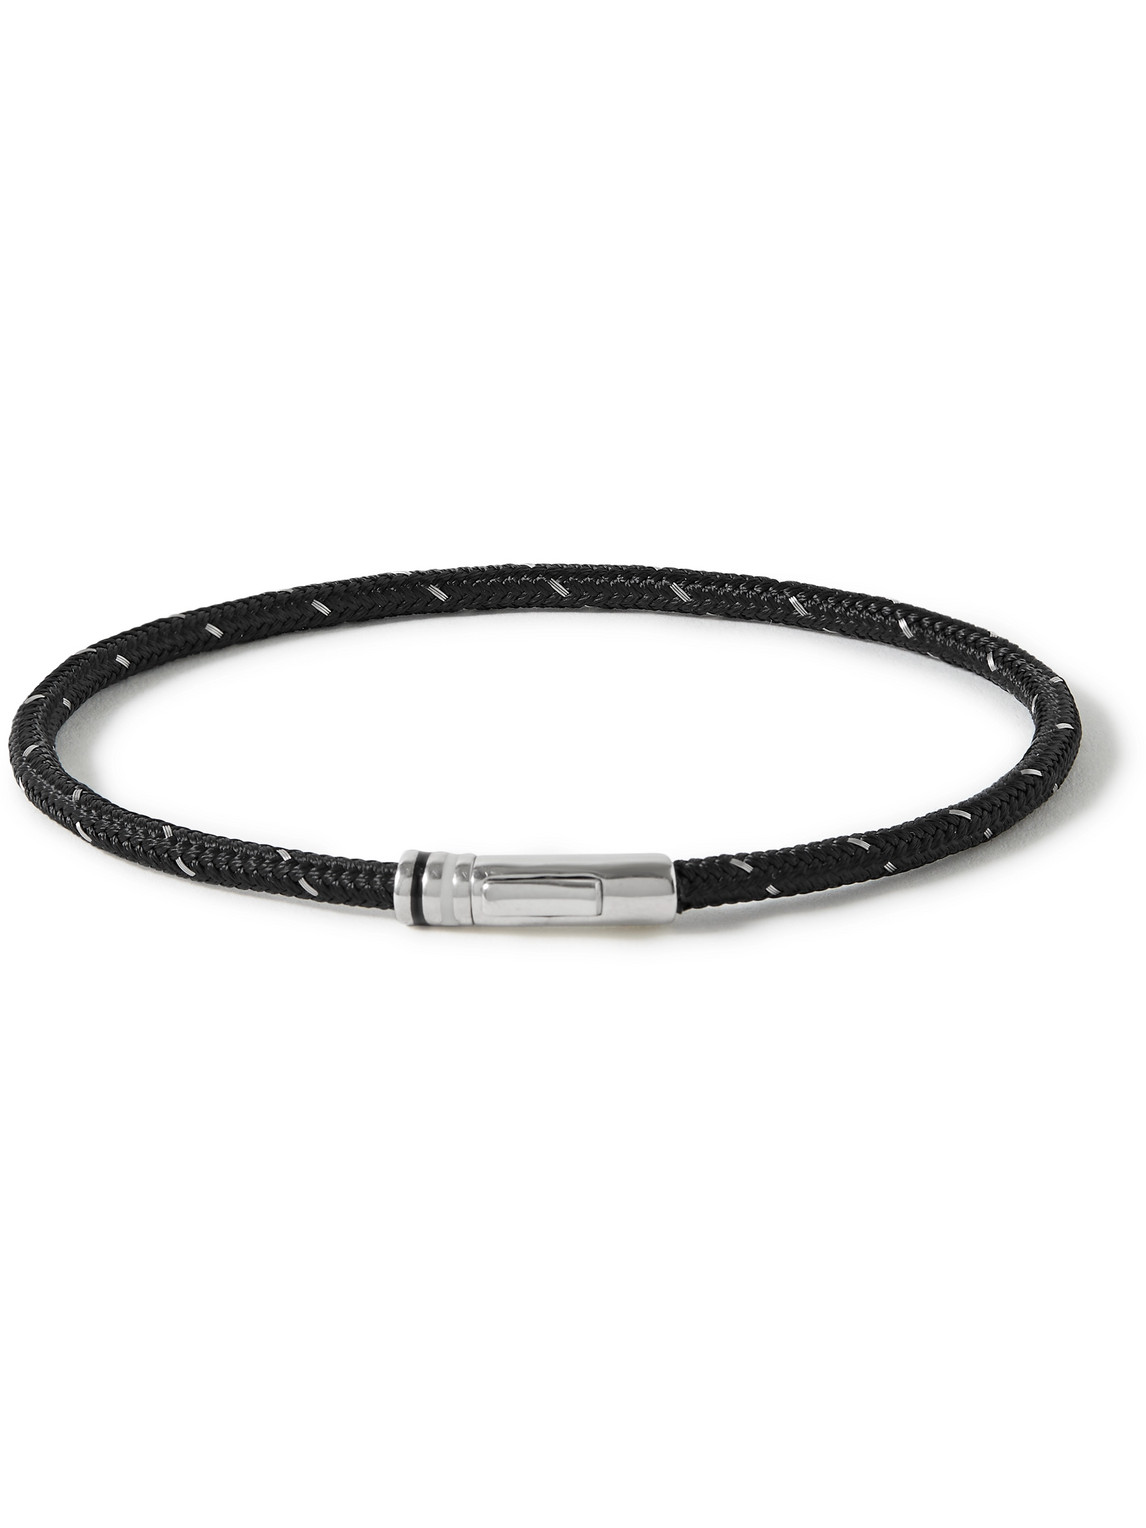 Miansai Juno Rope And Silver Bracelet In Black